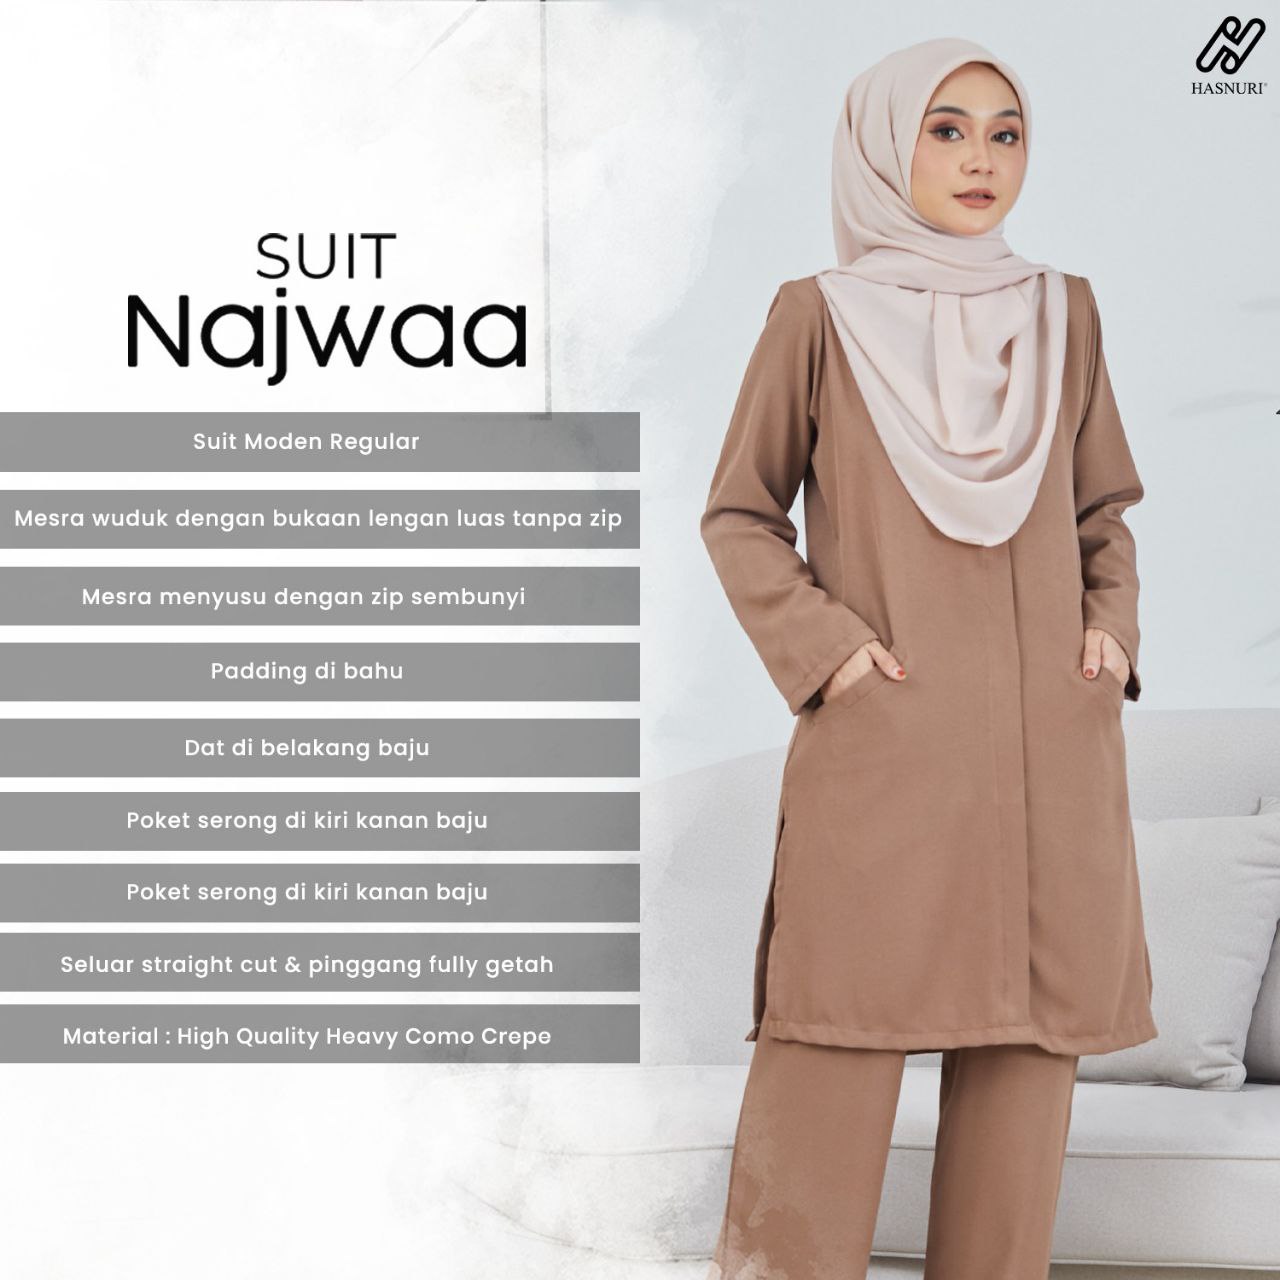 Suit Najwaa - Light Coco